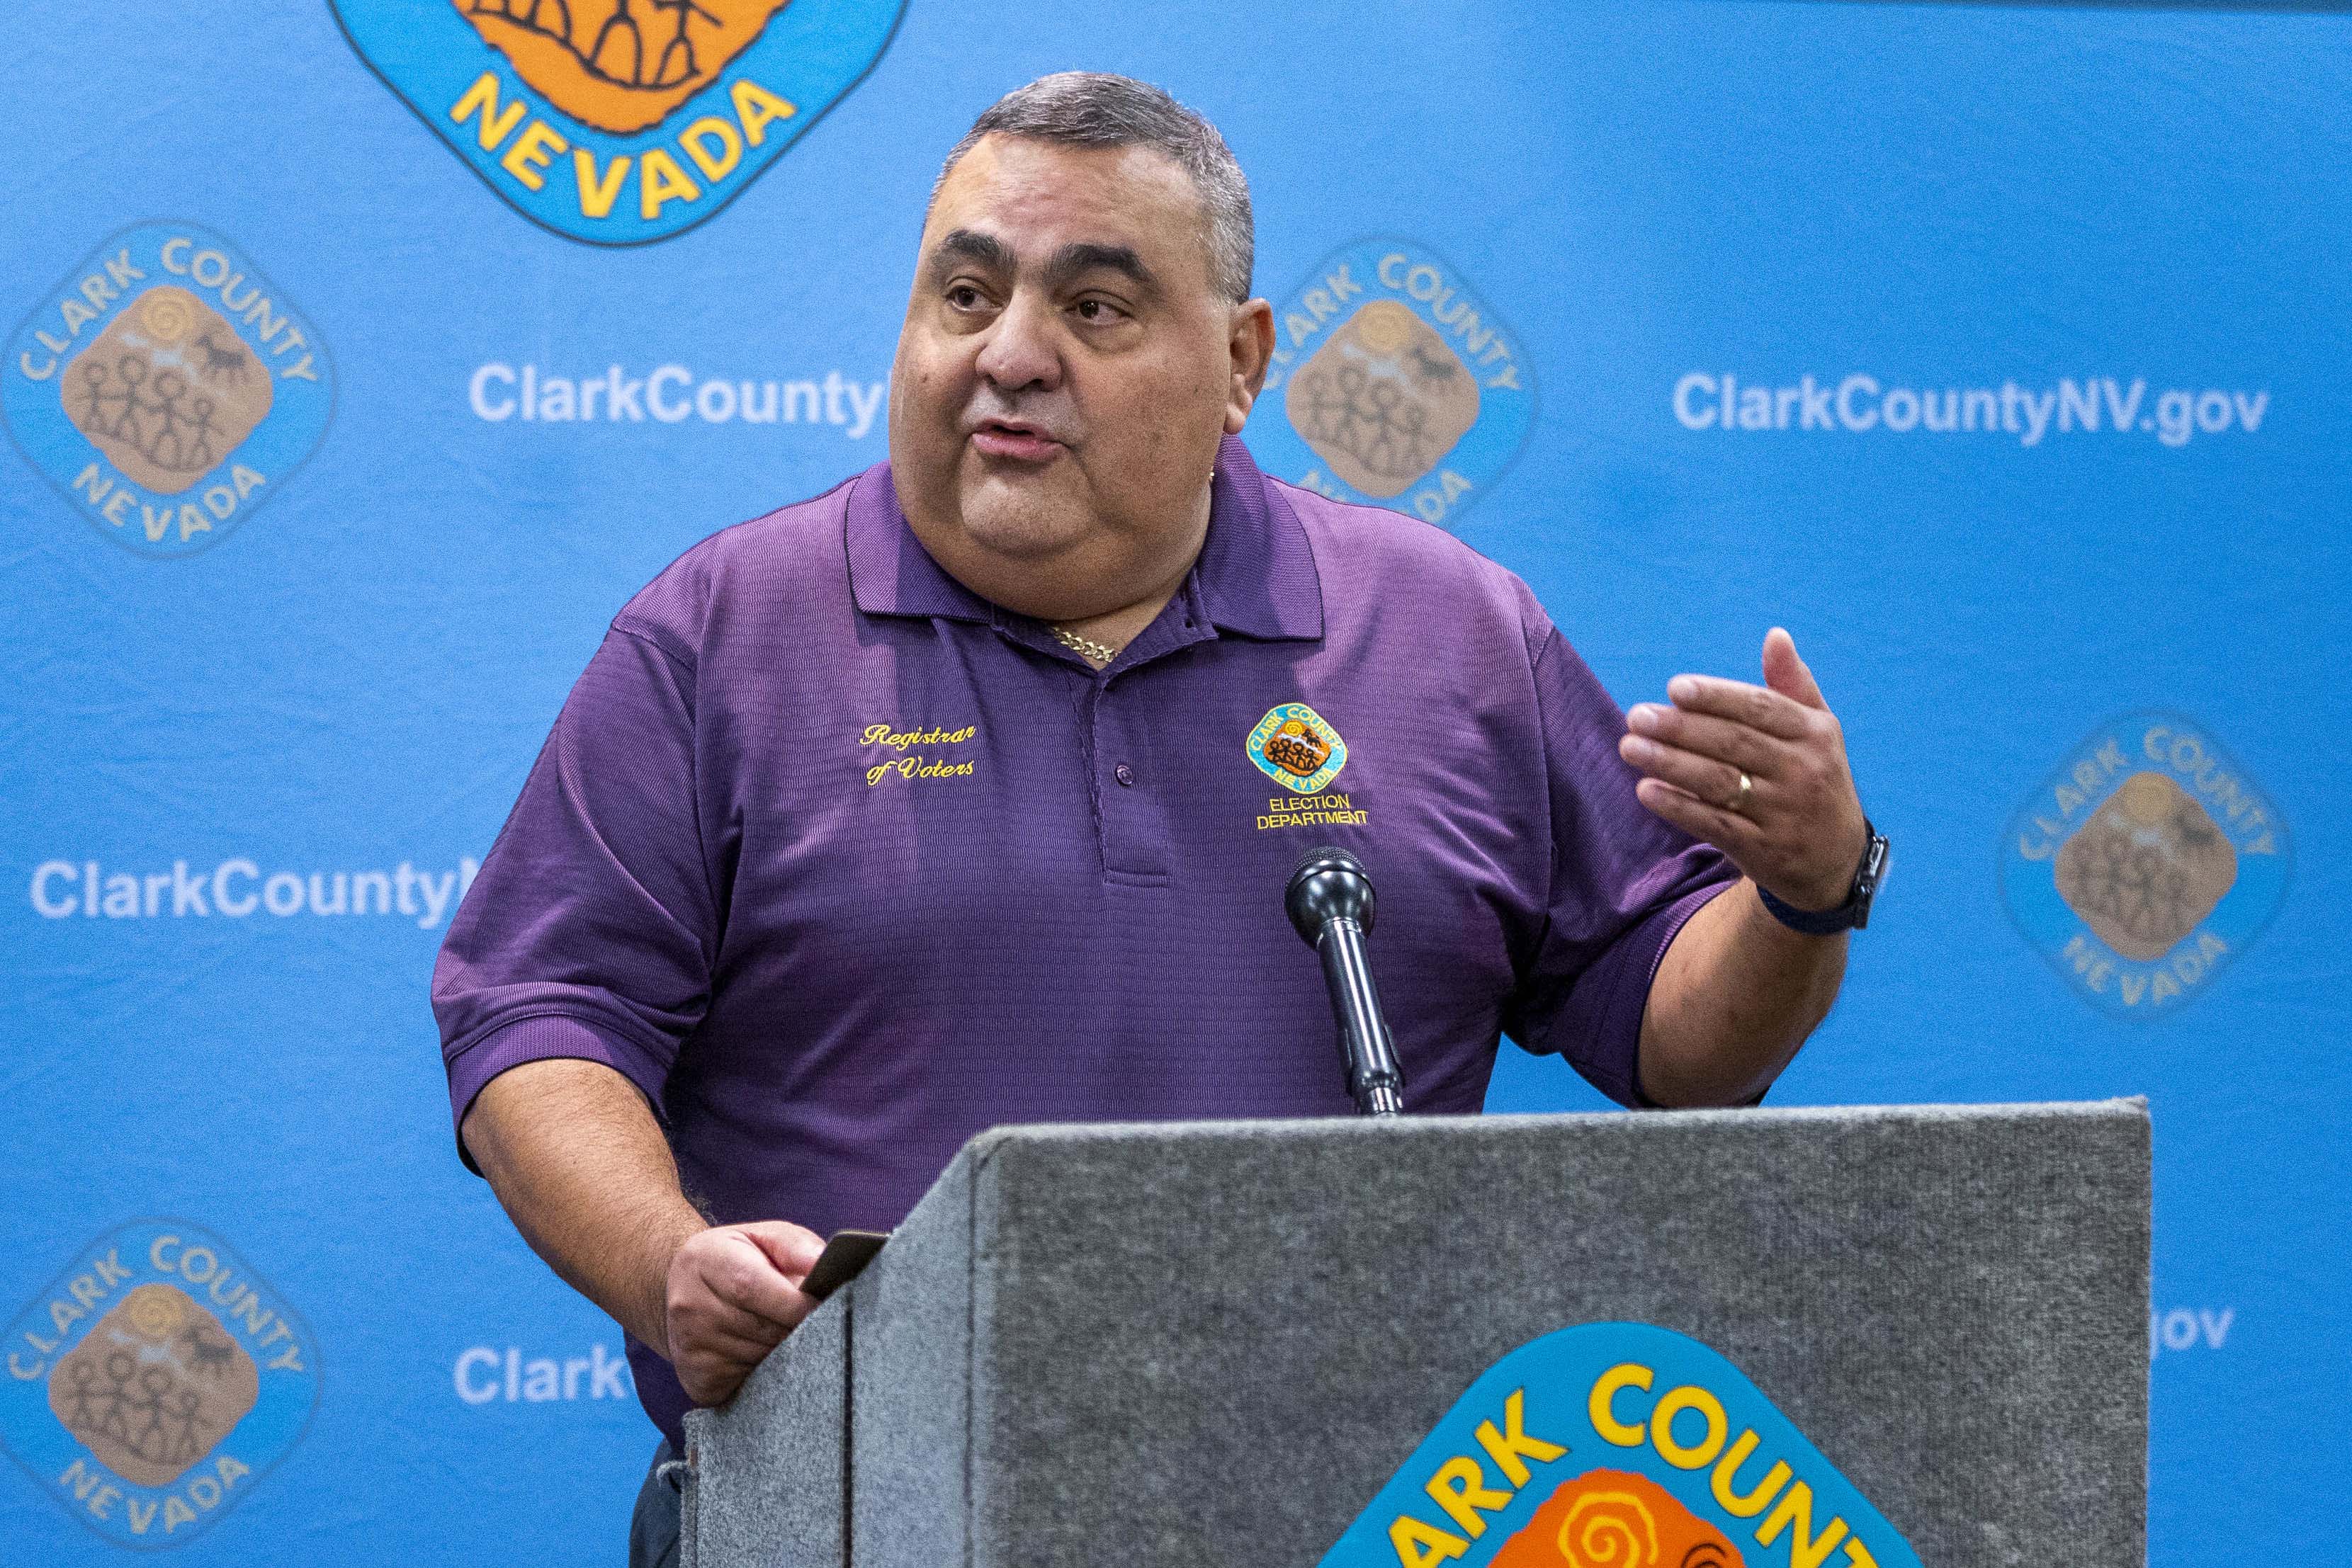 Penghitungan suara Clark County diharapkan selesai Sabtu